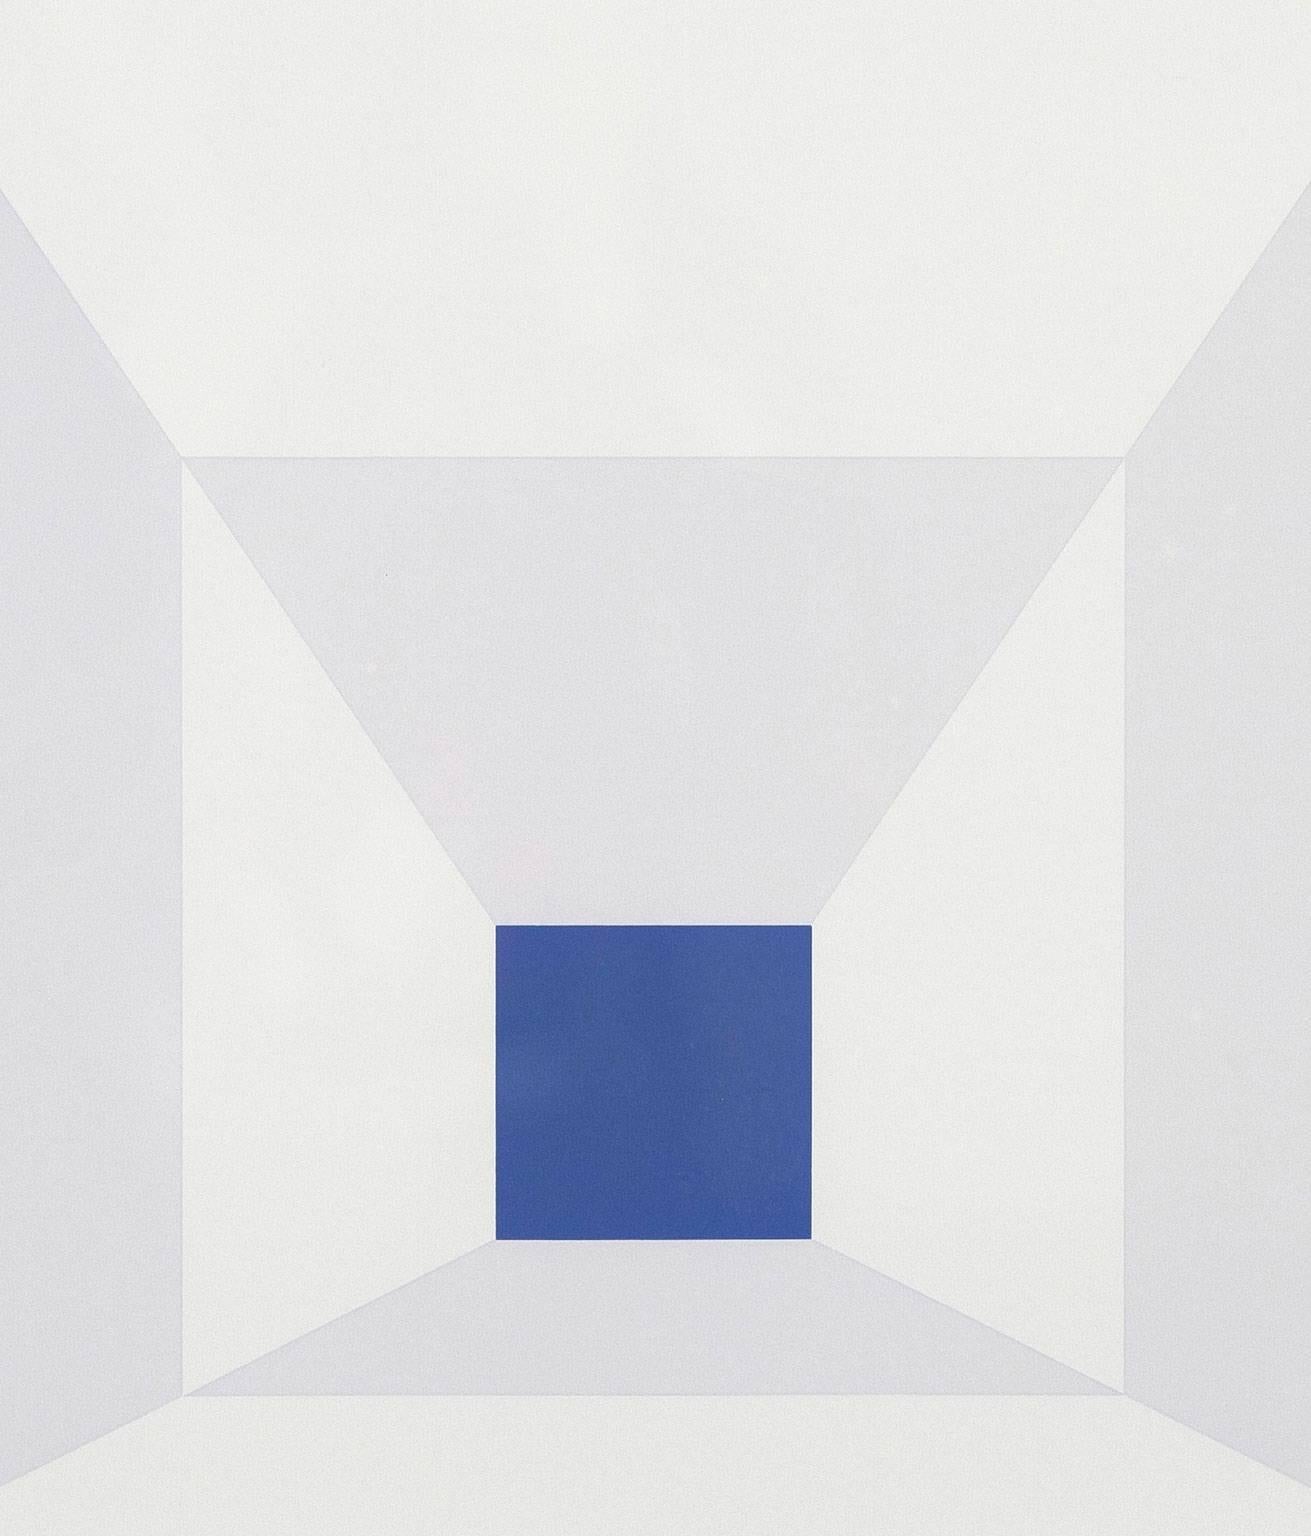 Josef Albers Abstract Print - Mitered Squares - Cobalt